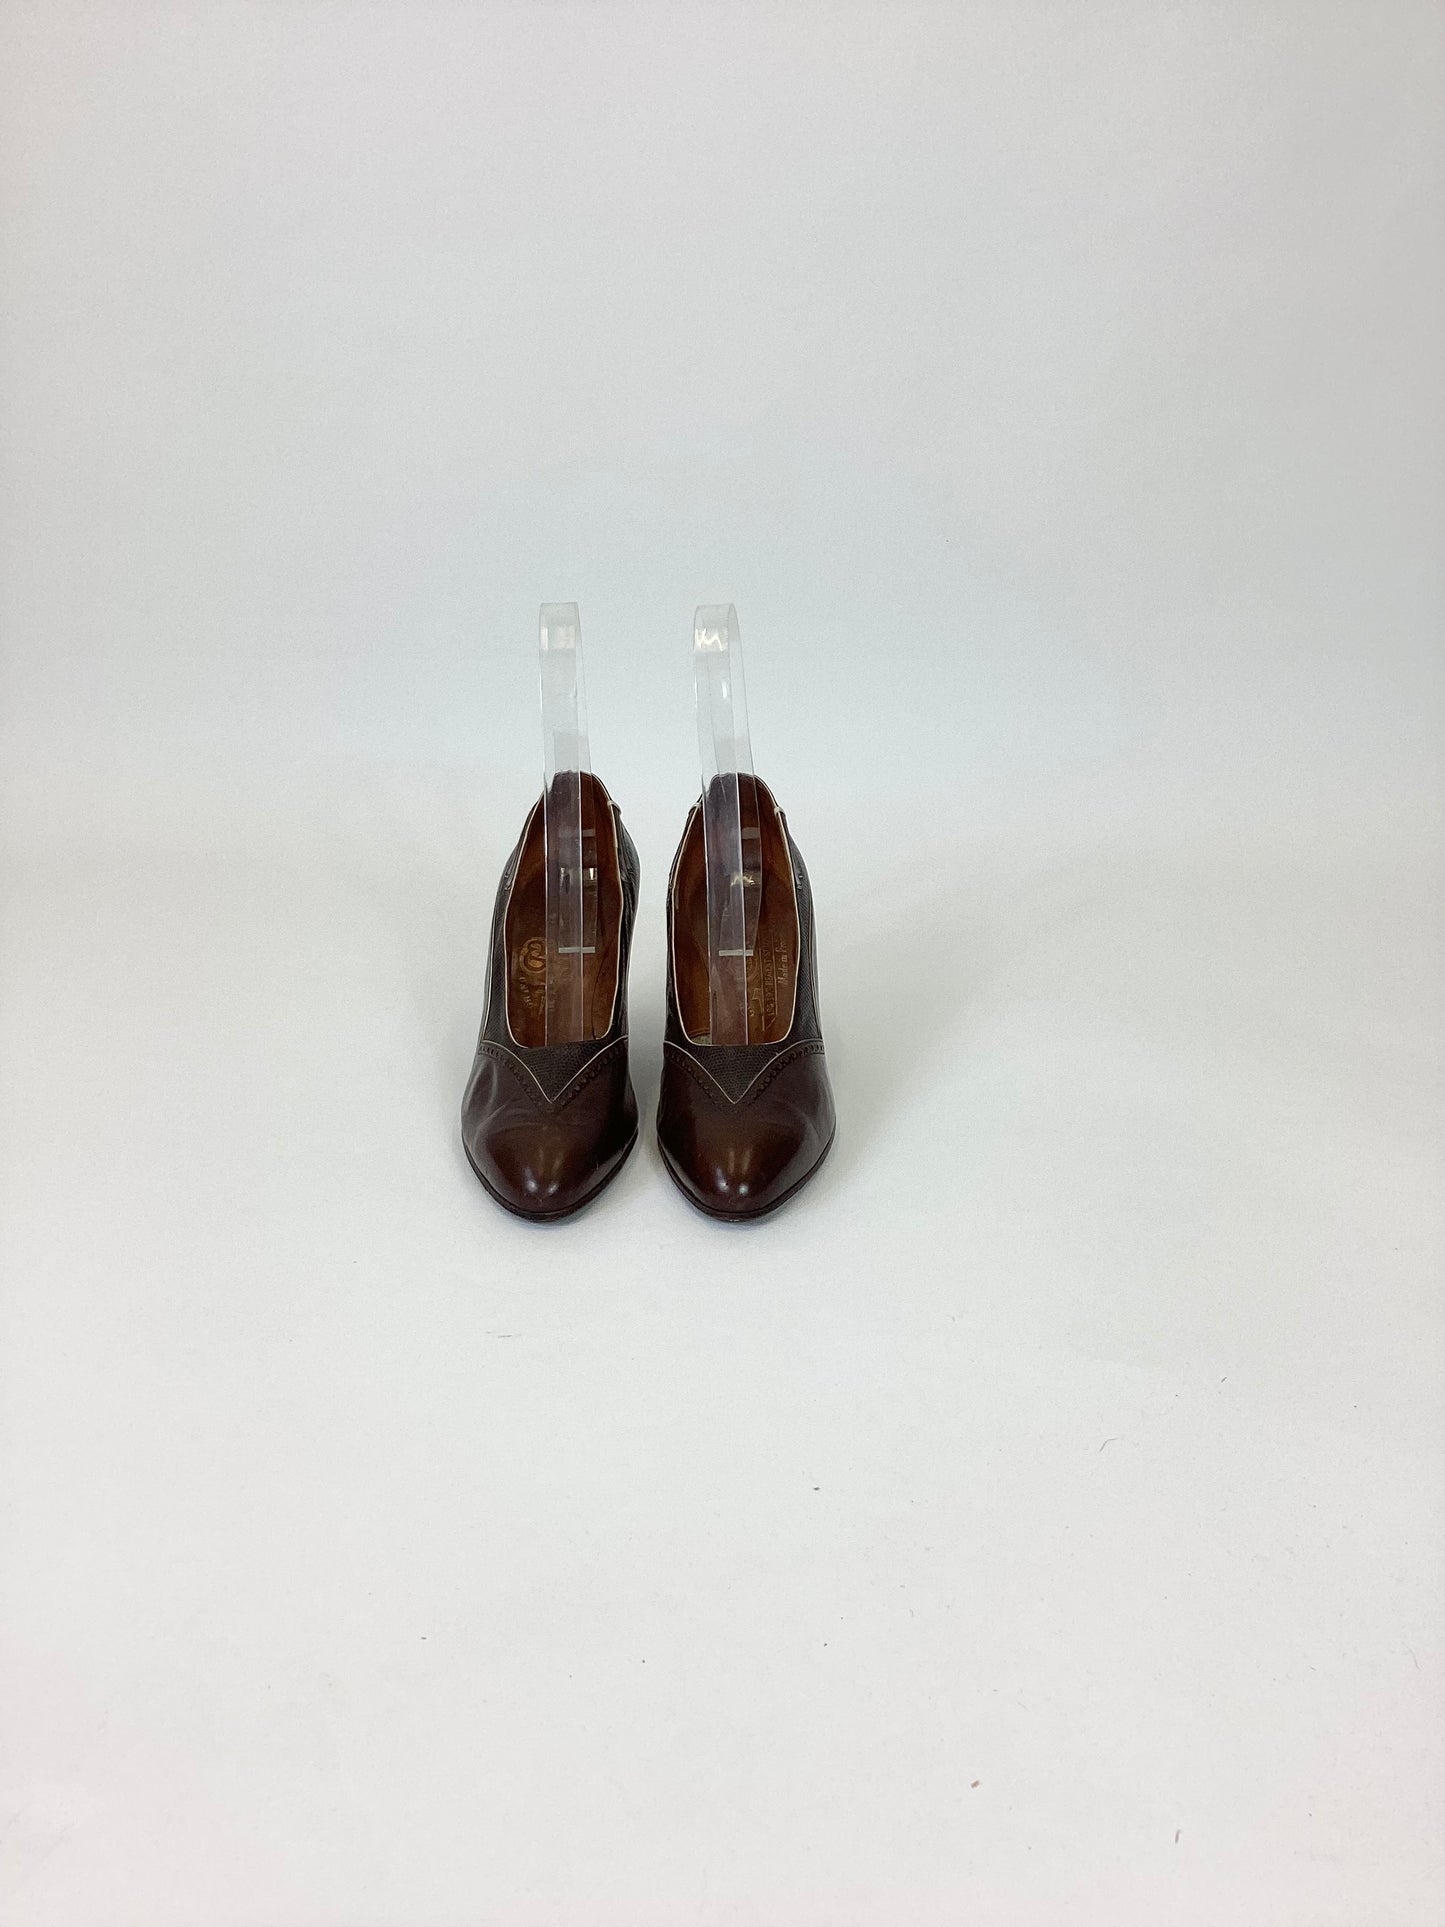 Original 20's/30s Amazing court shoes - in classic browns, edged in cream